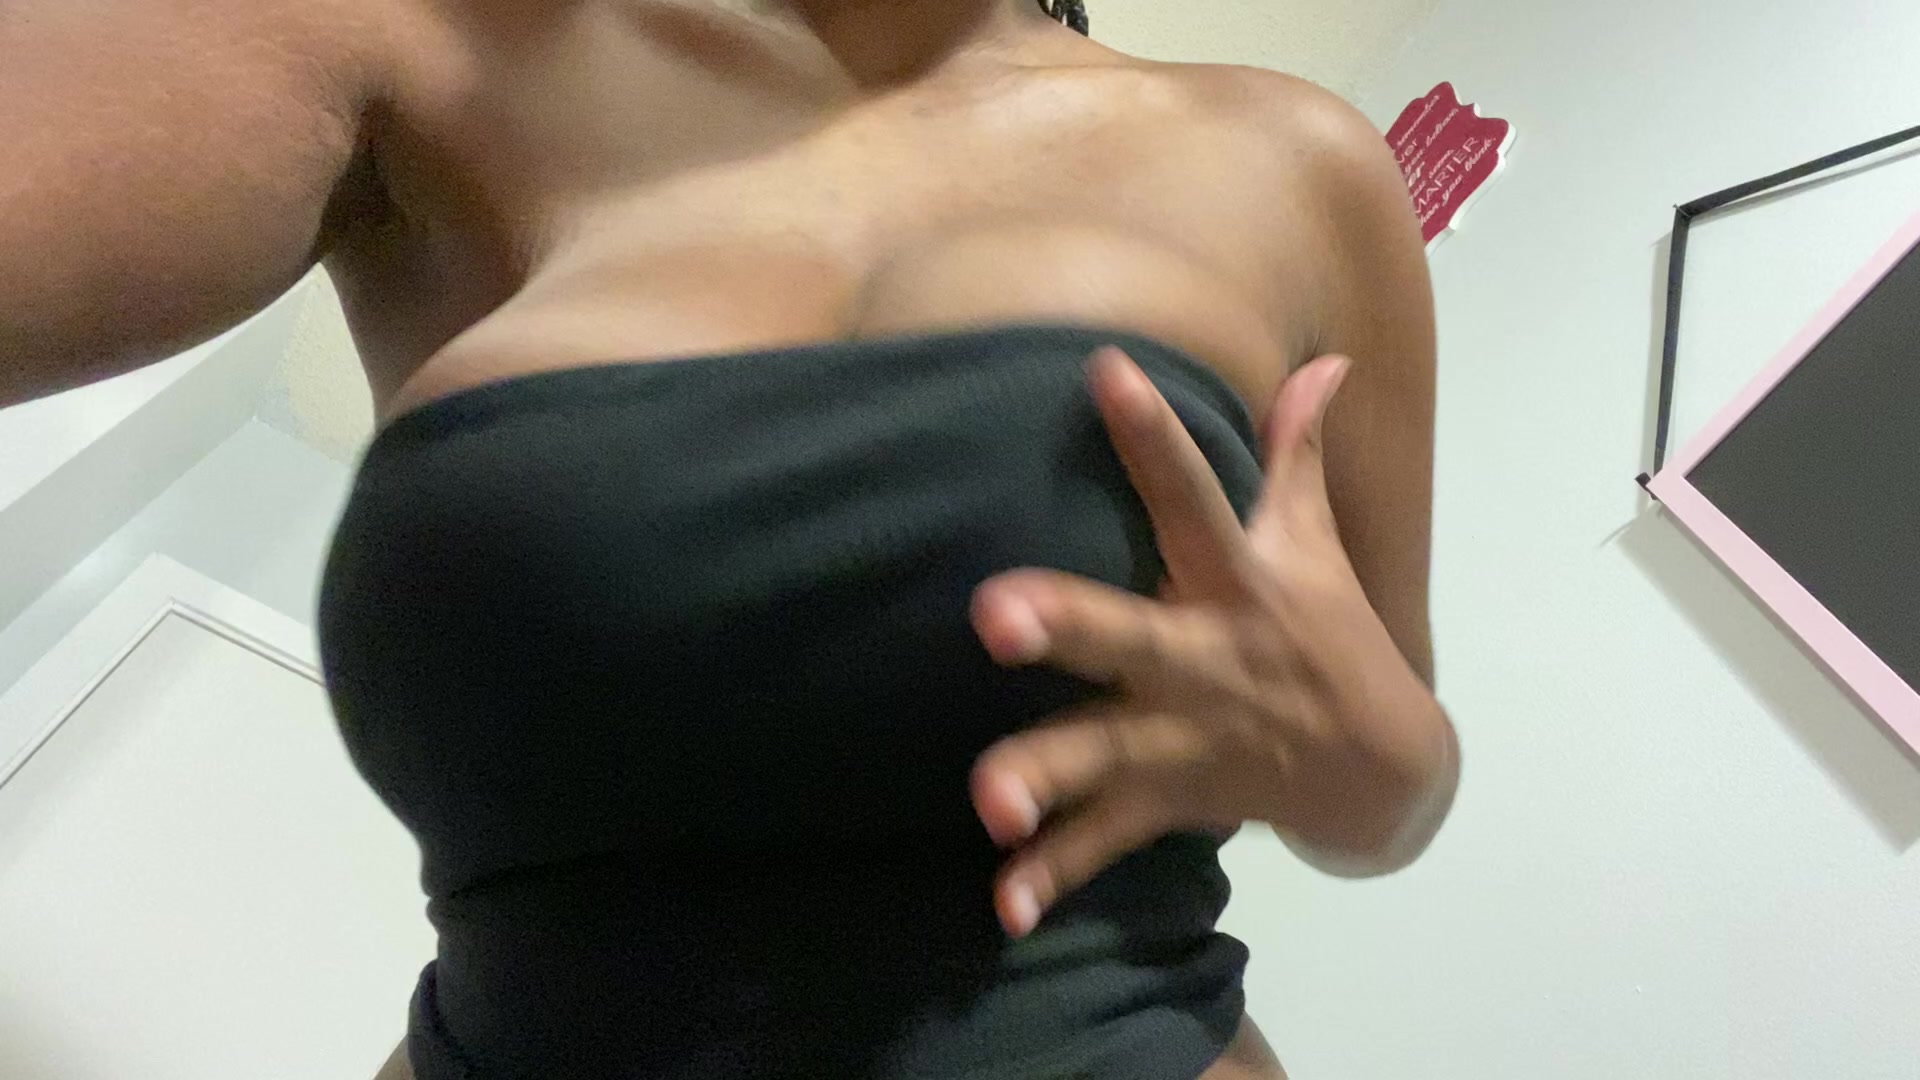 Are my tits appreciated here? :)